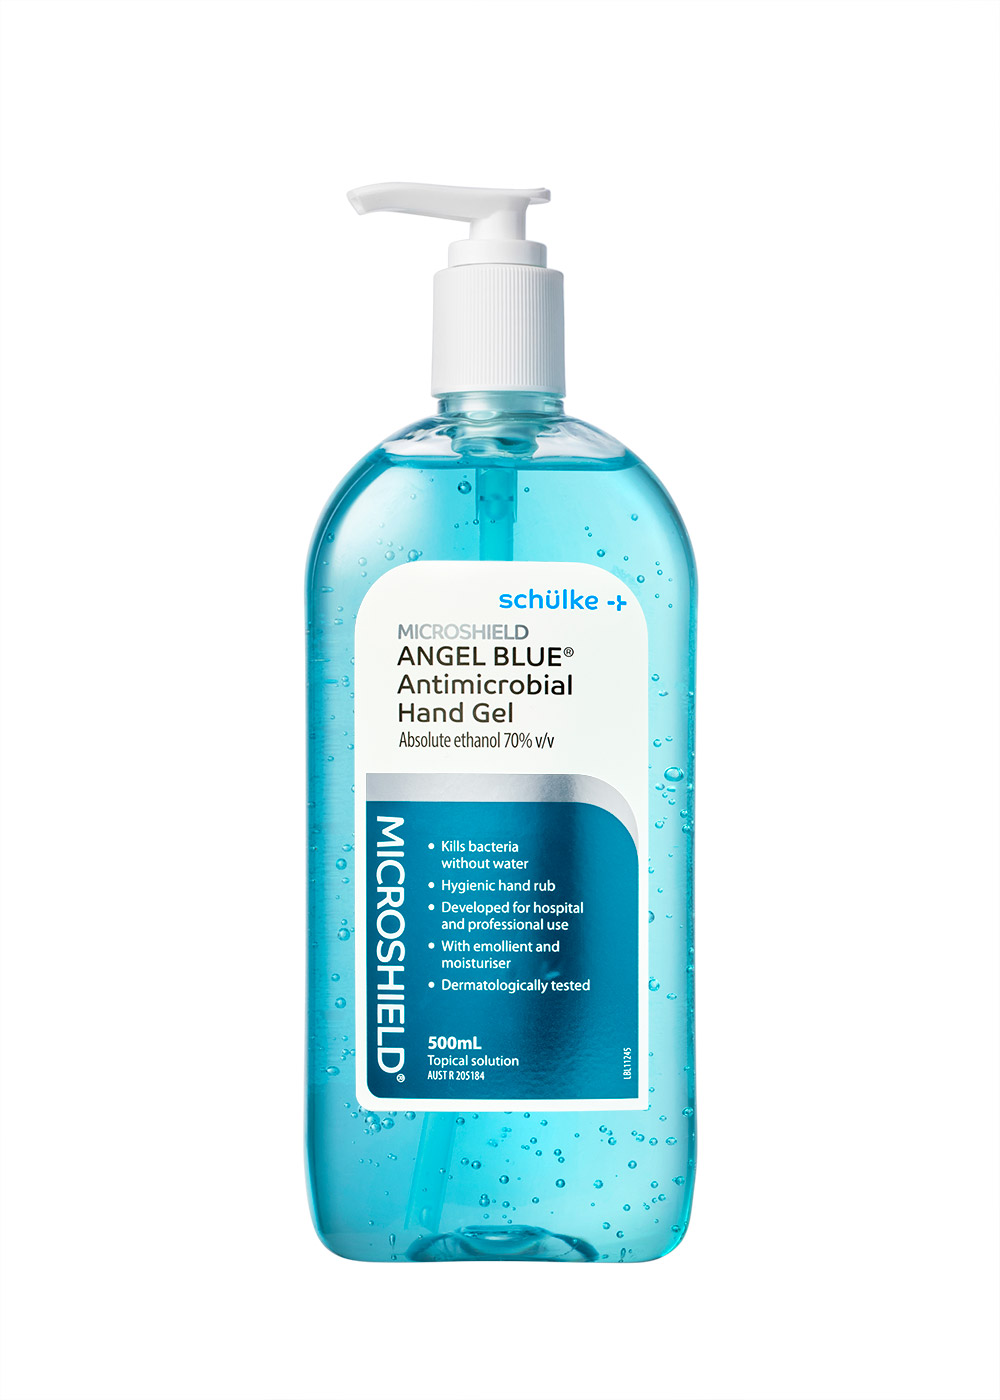 Microshield Angel Blue Antimicrobial Hand Gel 70% v/v Absolute Ethanol; 500 mL Each